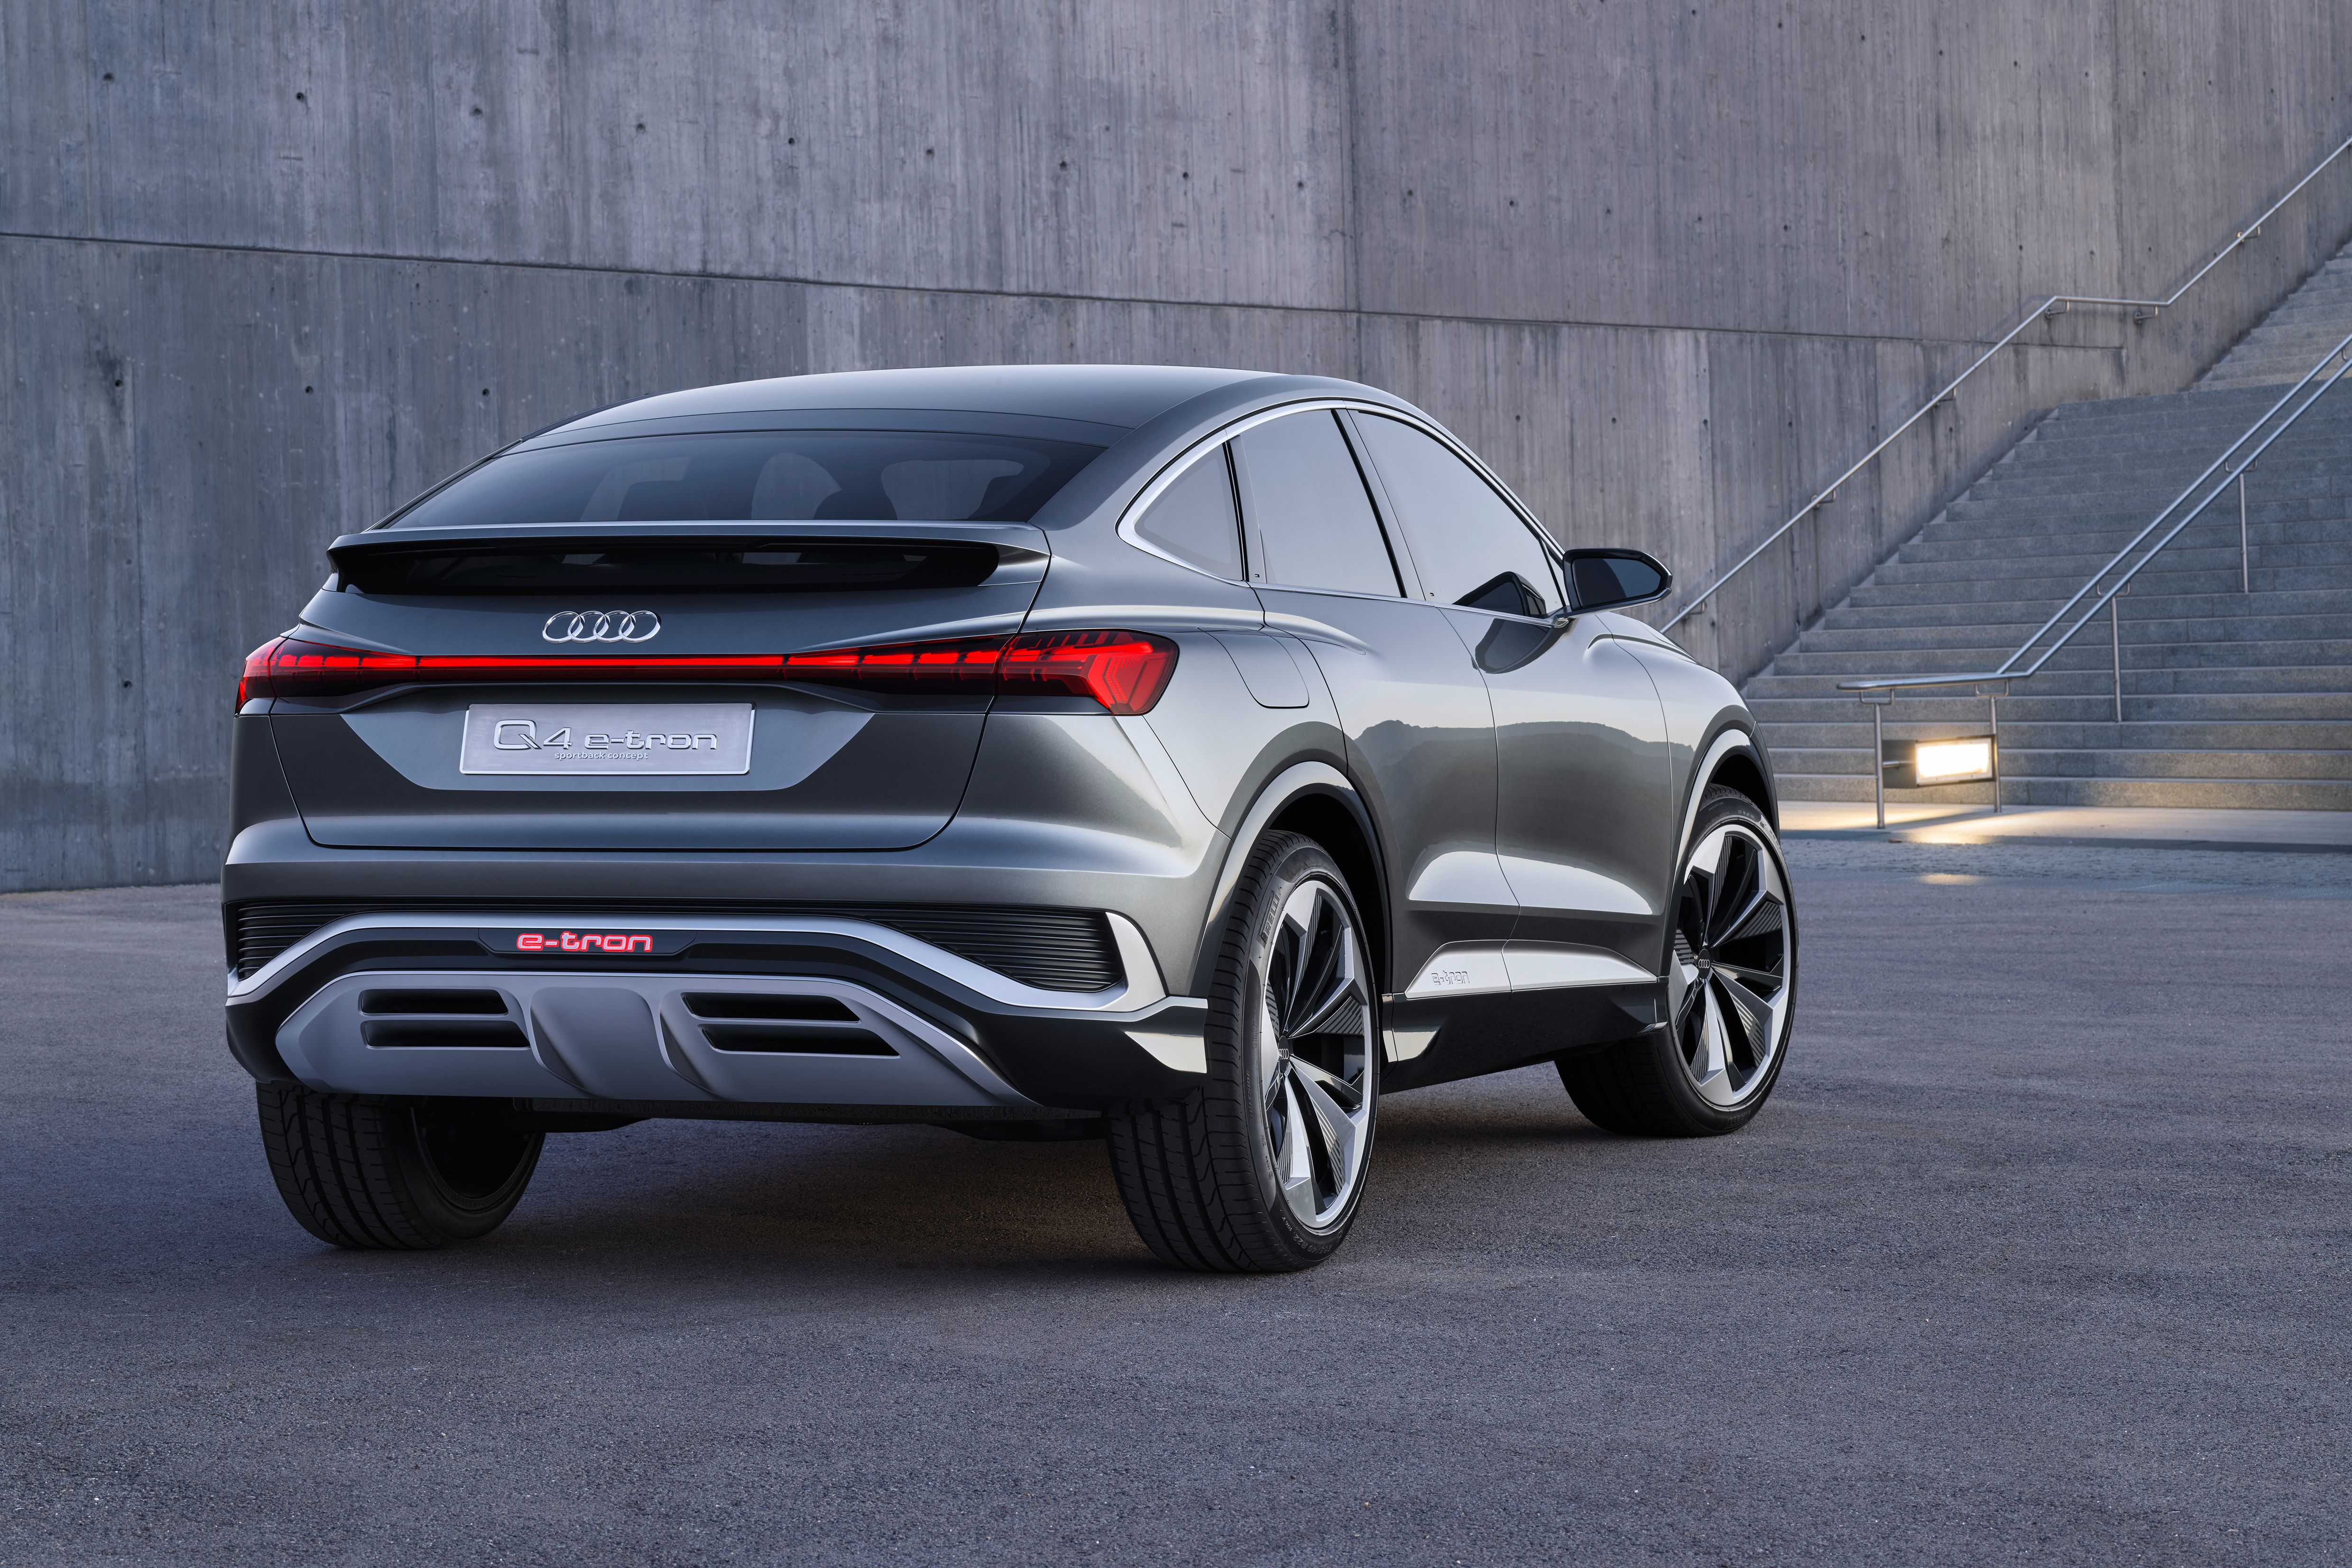 2020 Audi Q4 Sportback E-Tron Concept